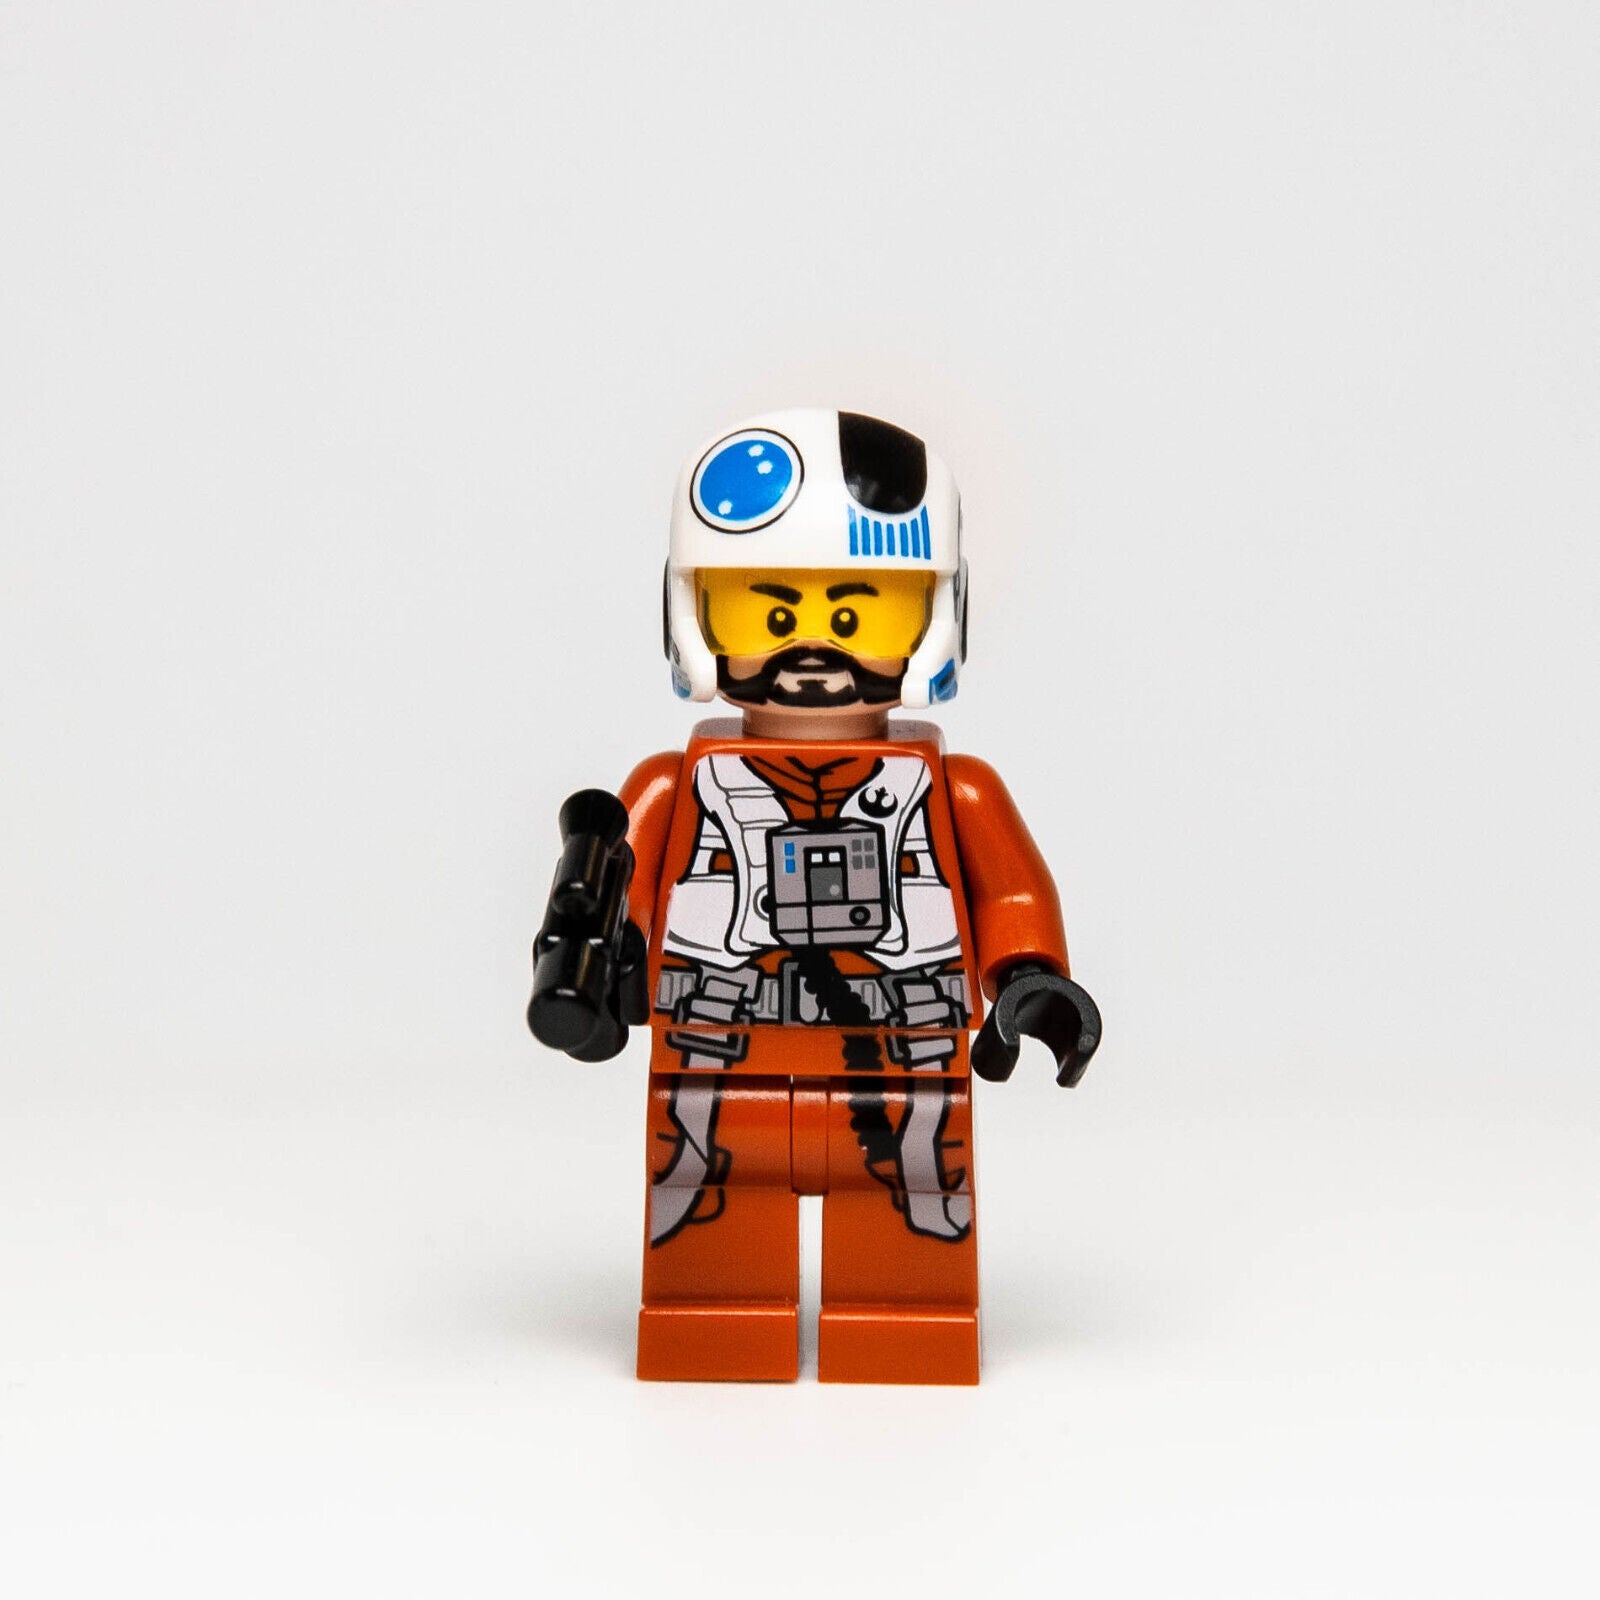 Lego Star Wars Minifigure - Resistance Pilot X-Wing Temmin Snap Wexley (sw0705)